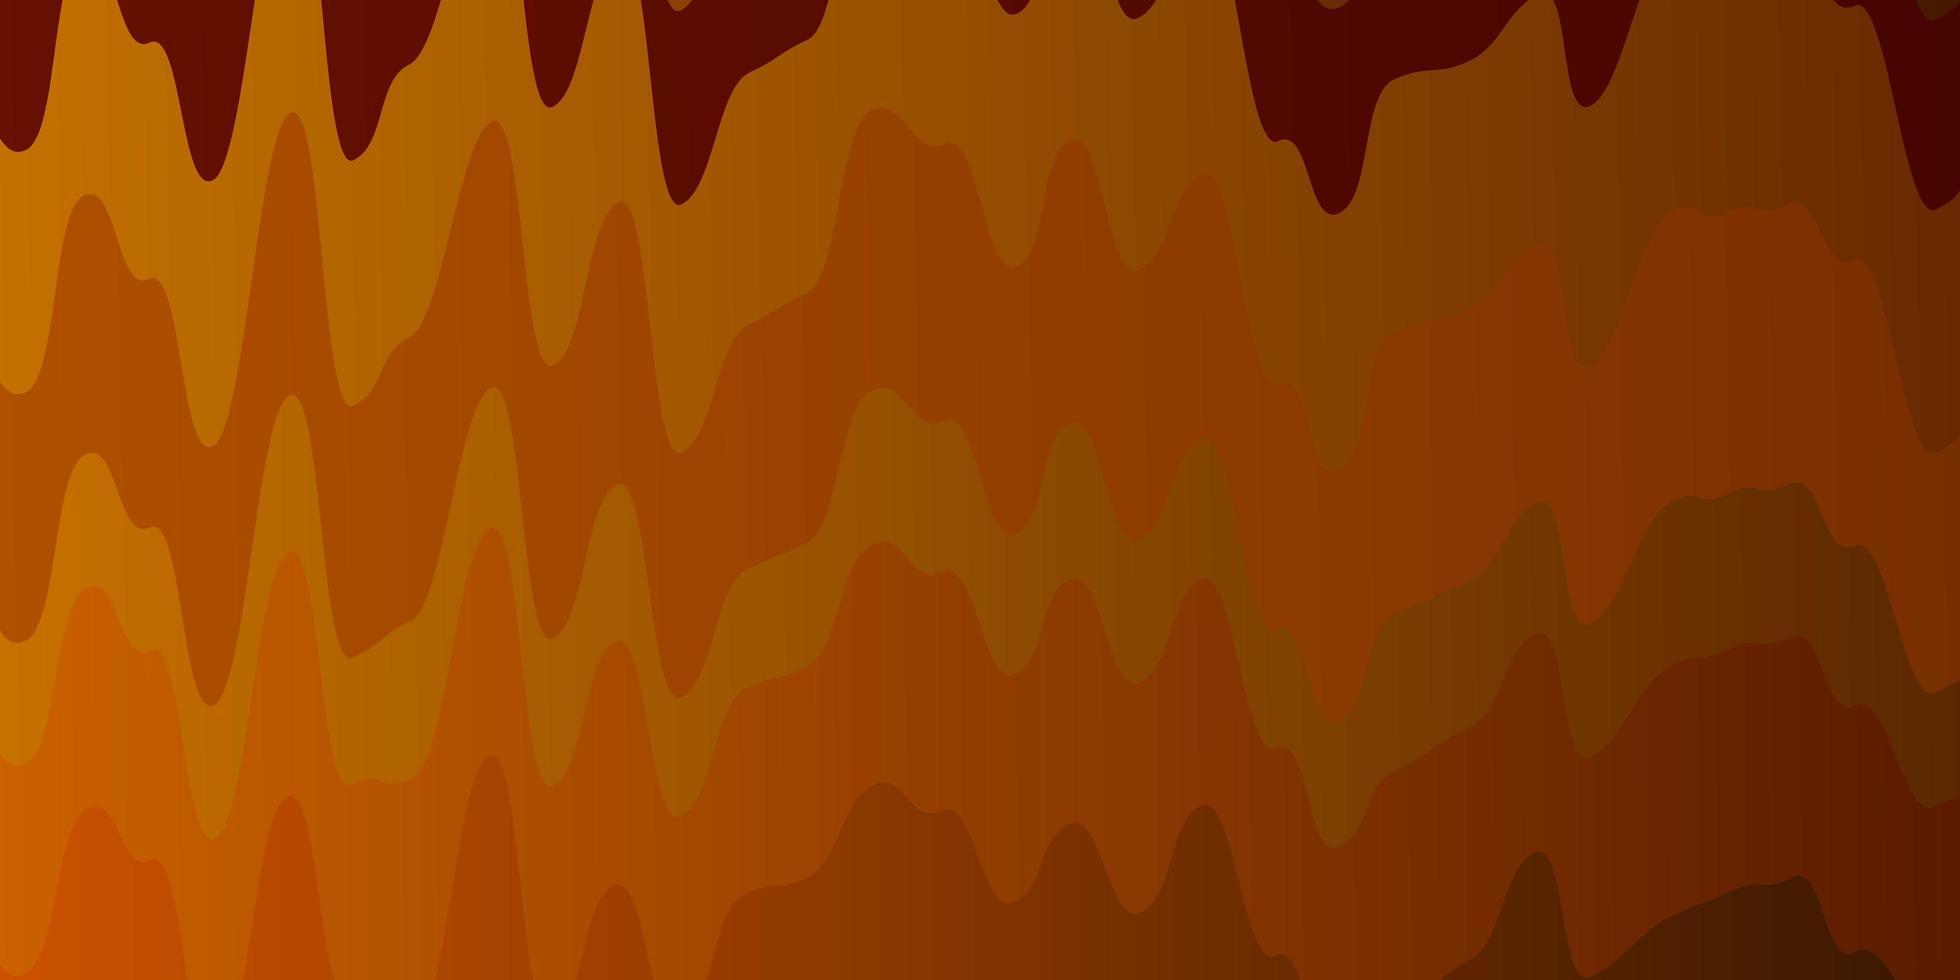 Dark Orange vector template with wry lines